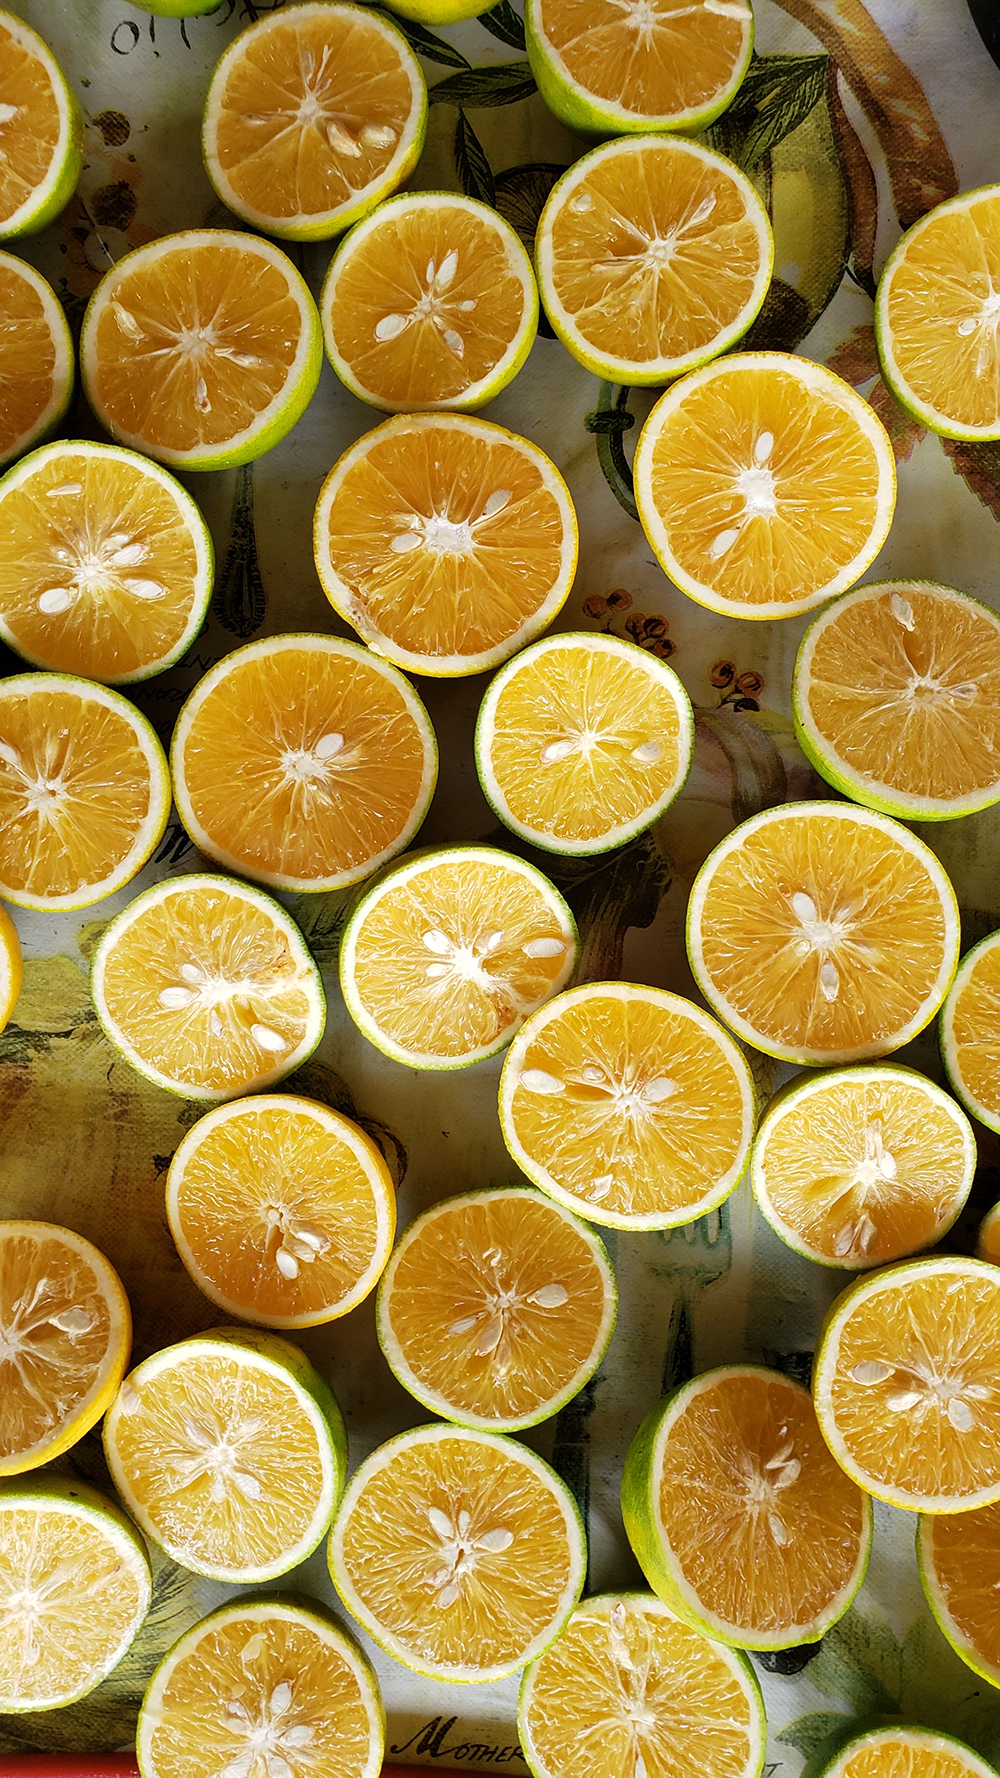 Lemons and limes for the lemon-lime coconut syrup cake recipe